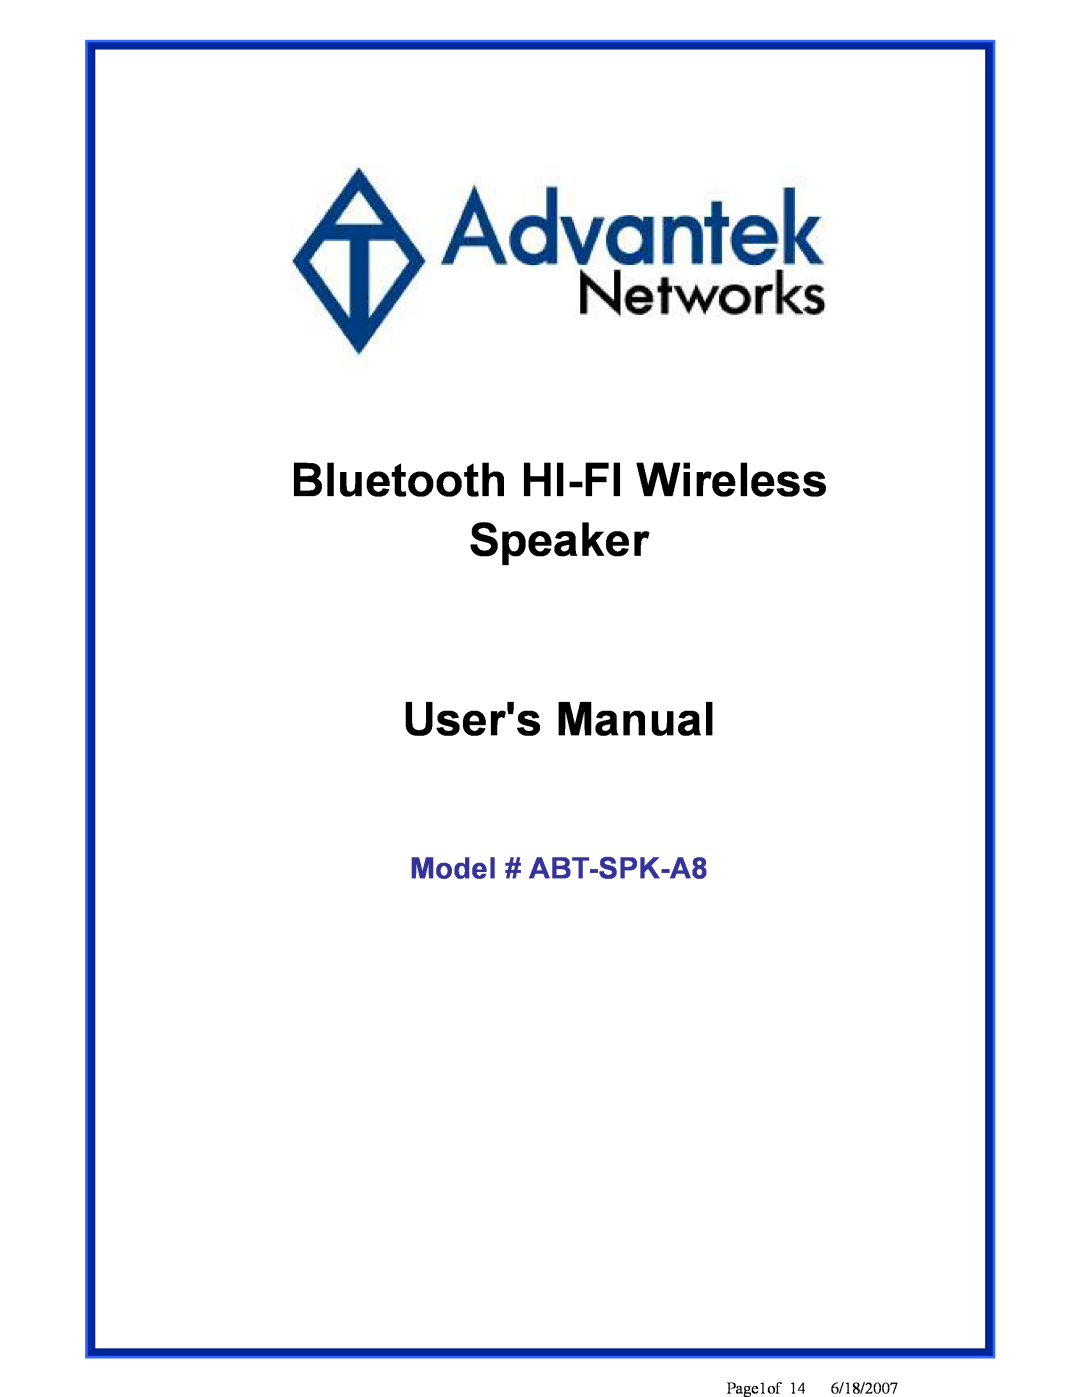 Advantek Networks user manual Bluetooth HI-FIWireless, Model # ABT-SPK-A8, Page1of 14 6/18/2007 